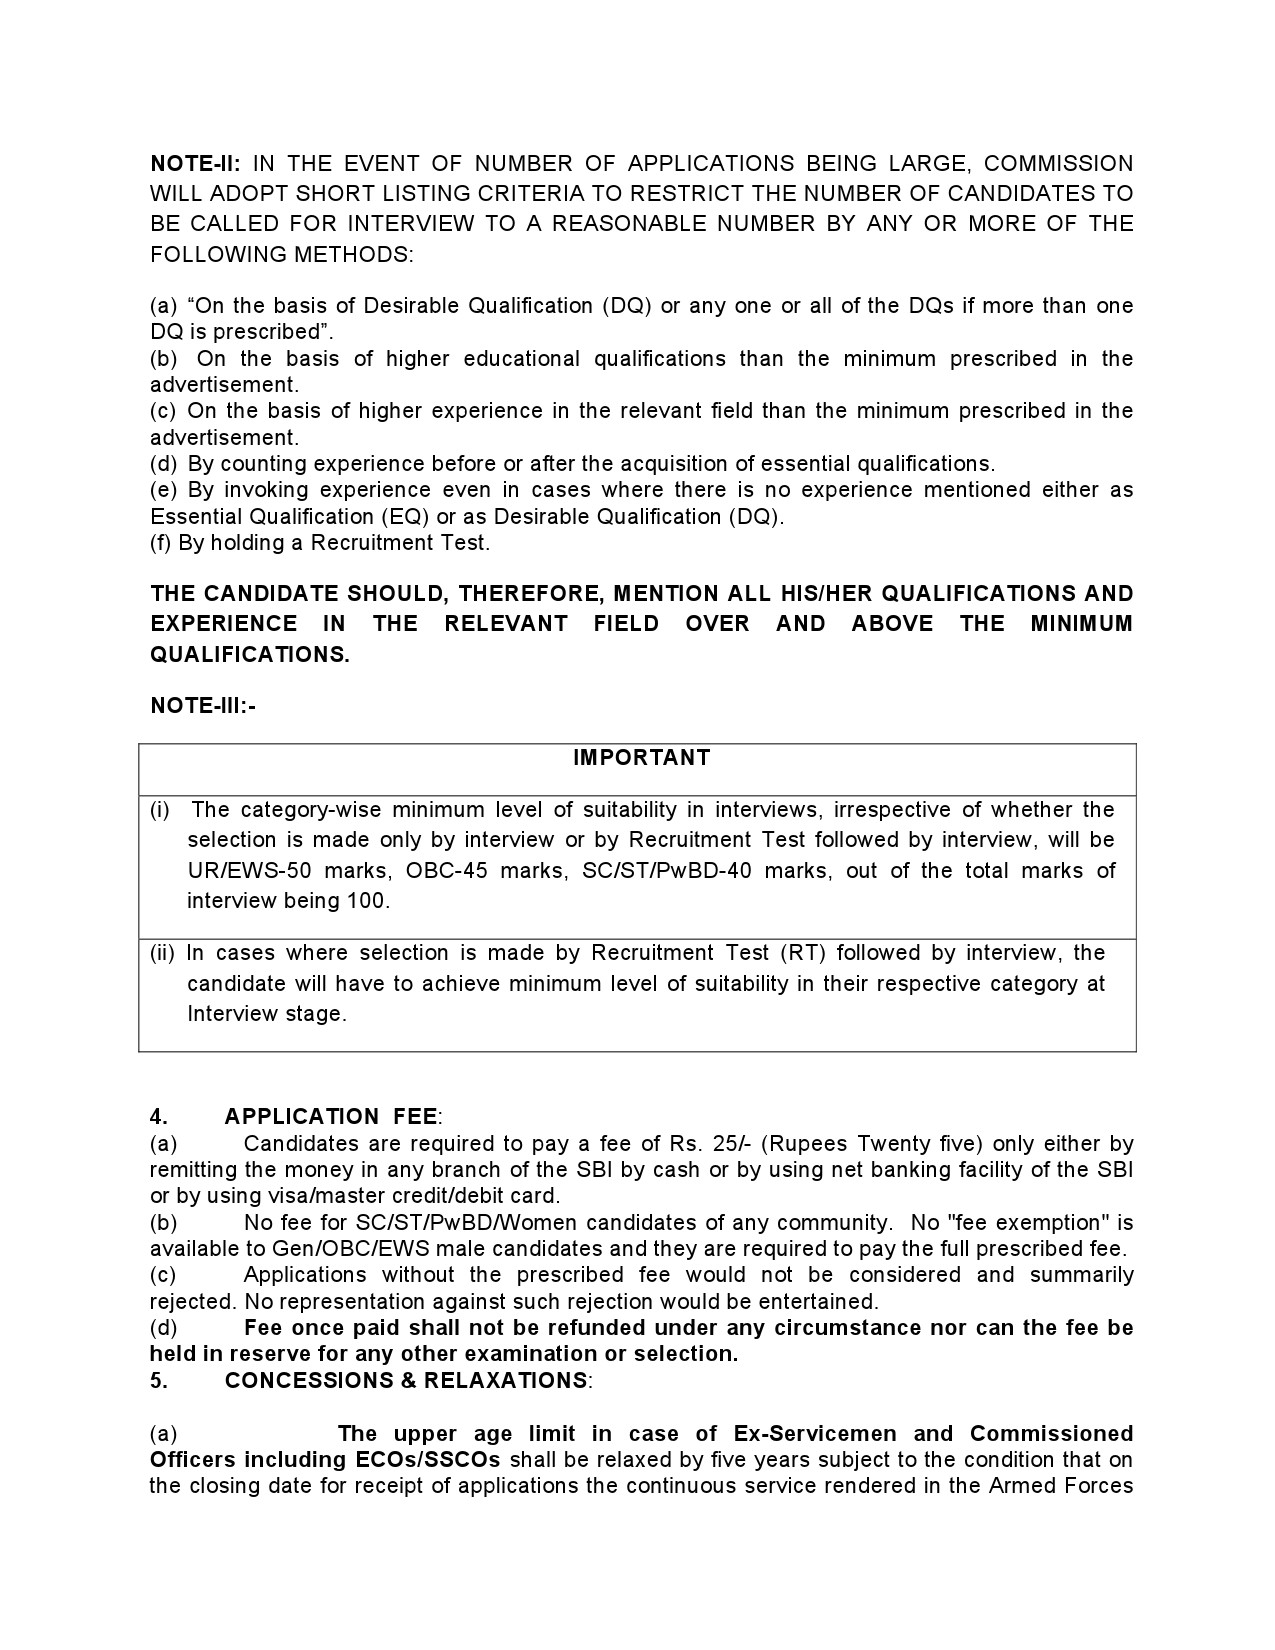 UPSC Notification 042021 for Multiple vacancies - Notification Image 9